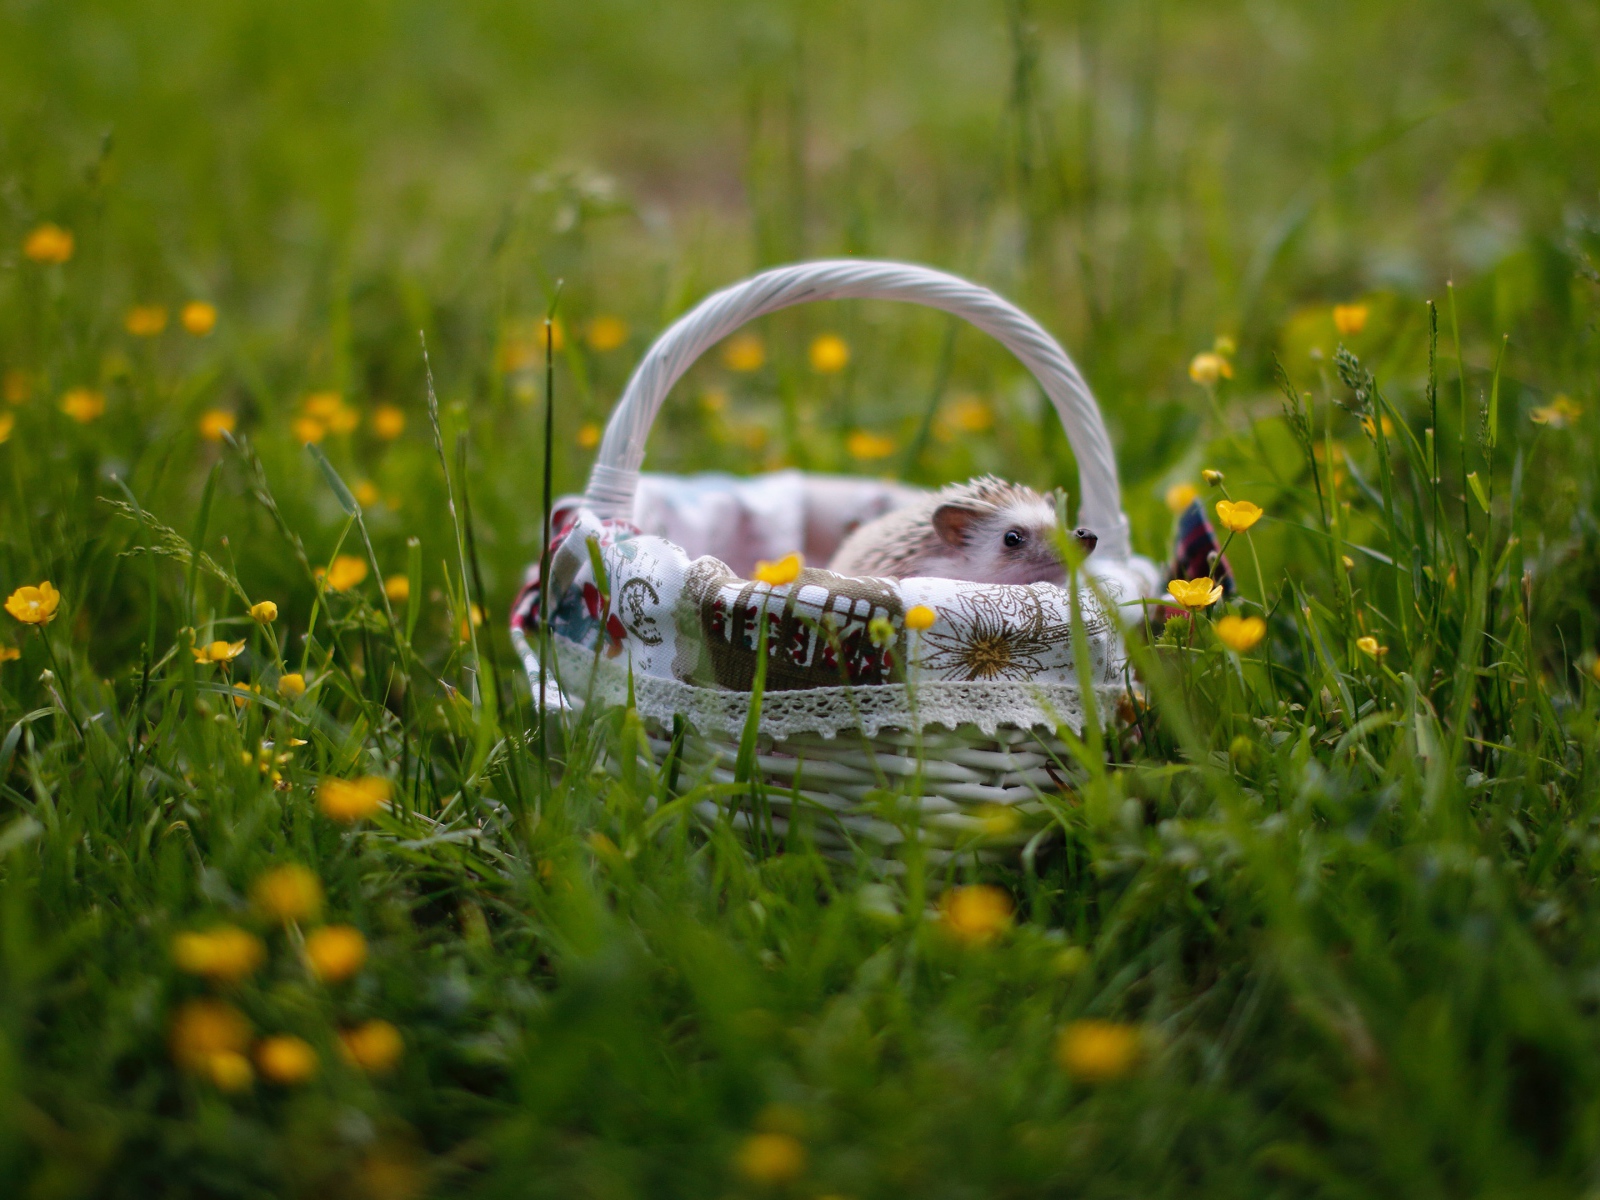 Little hedgehog in a basket on green grass